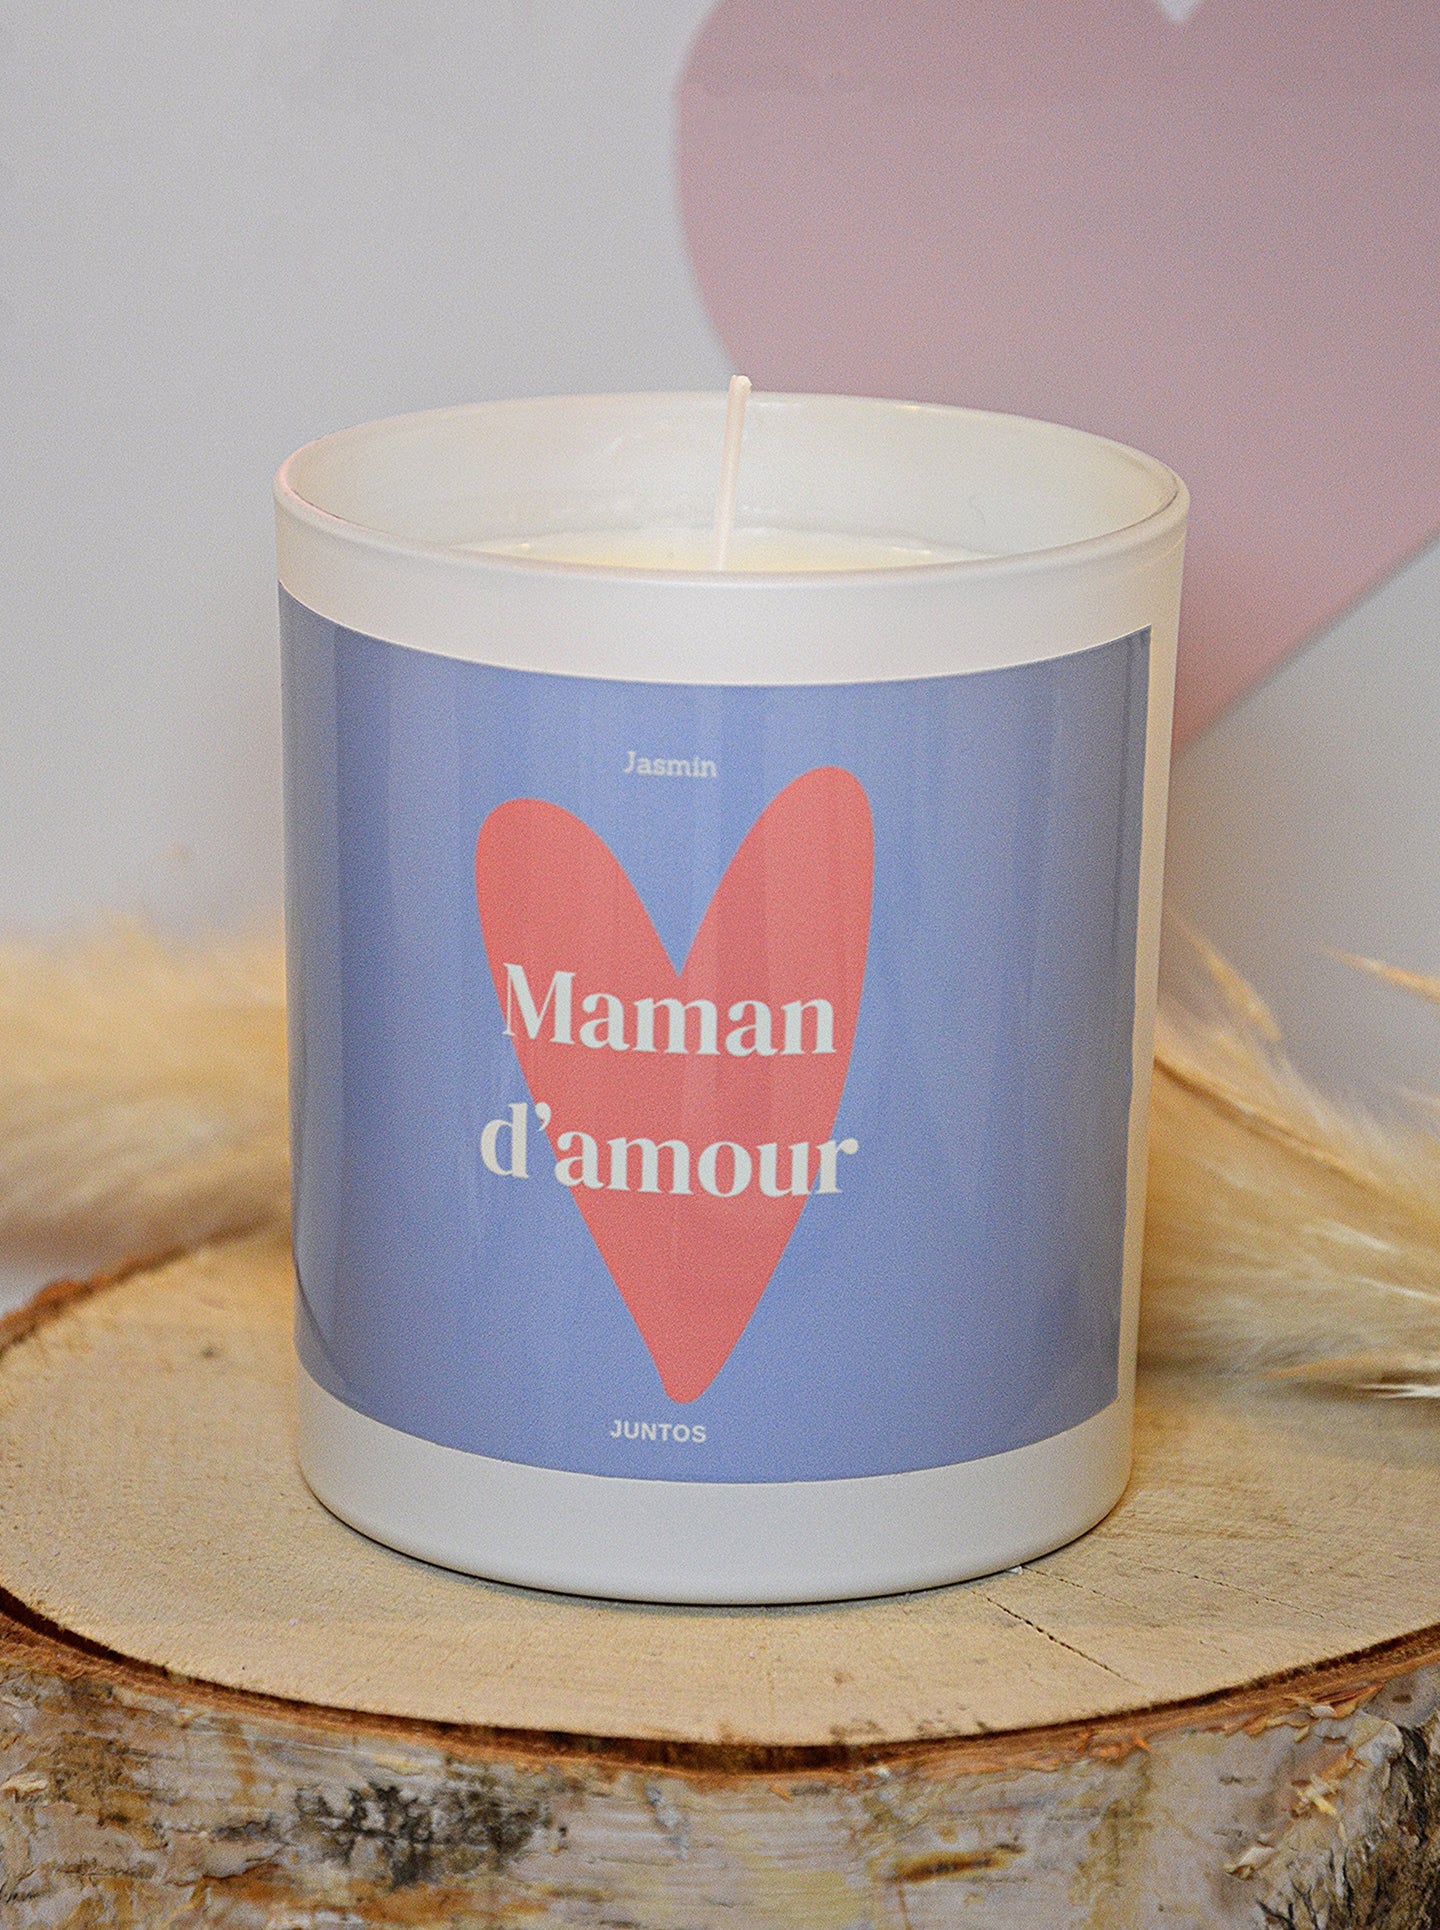 Bougie parfumée – Maman d'amour – Pot réutilisable